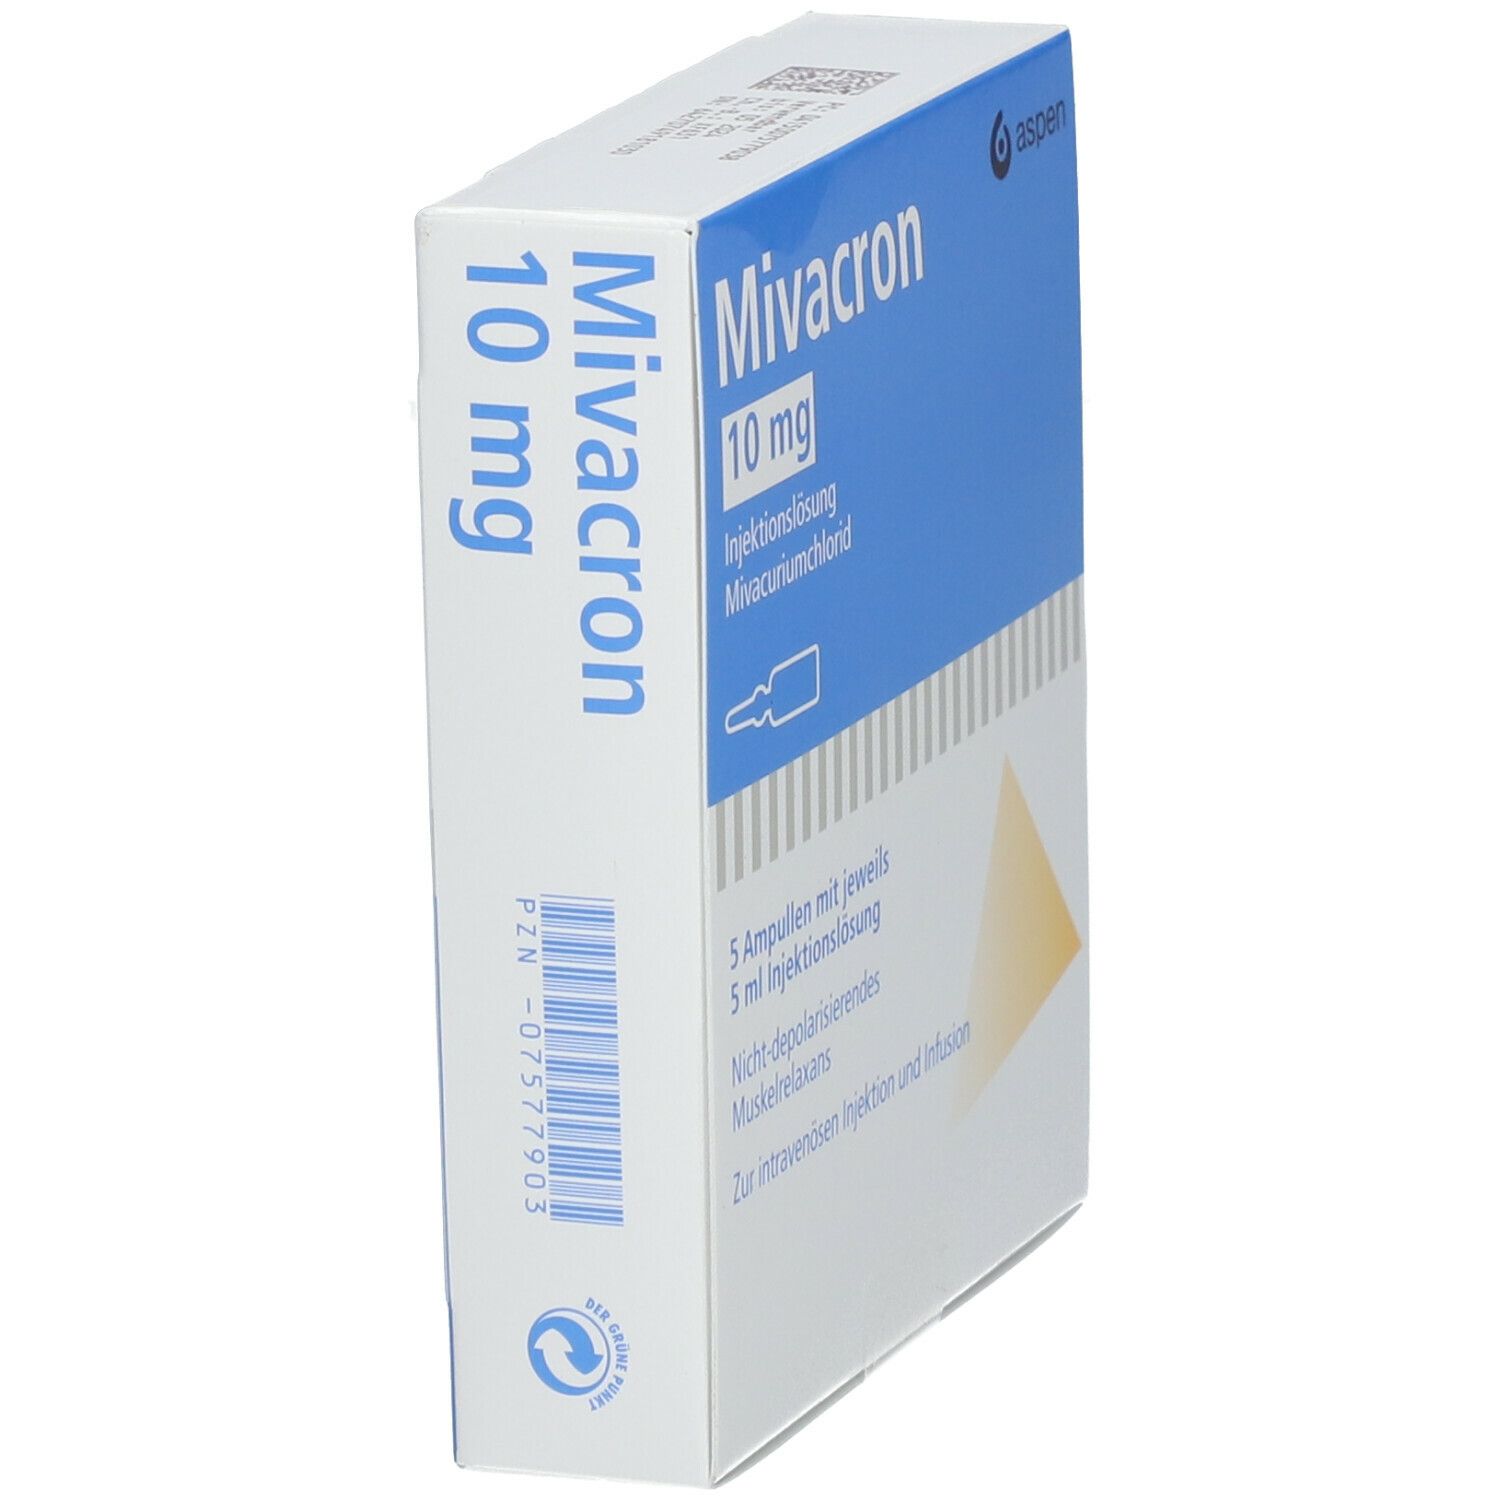 Mivacron® 10 mg